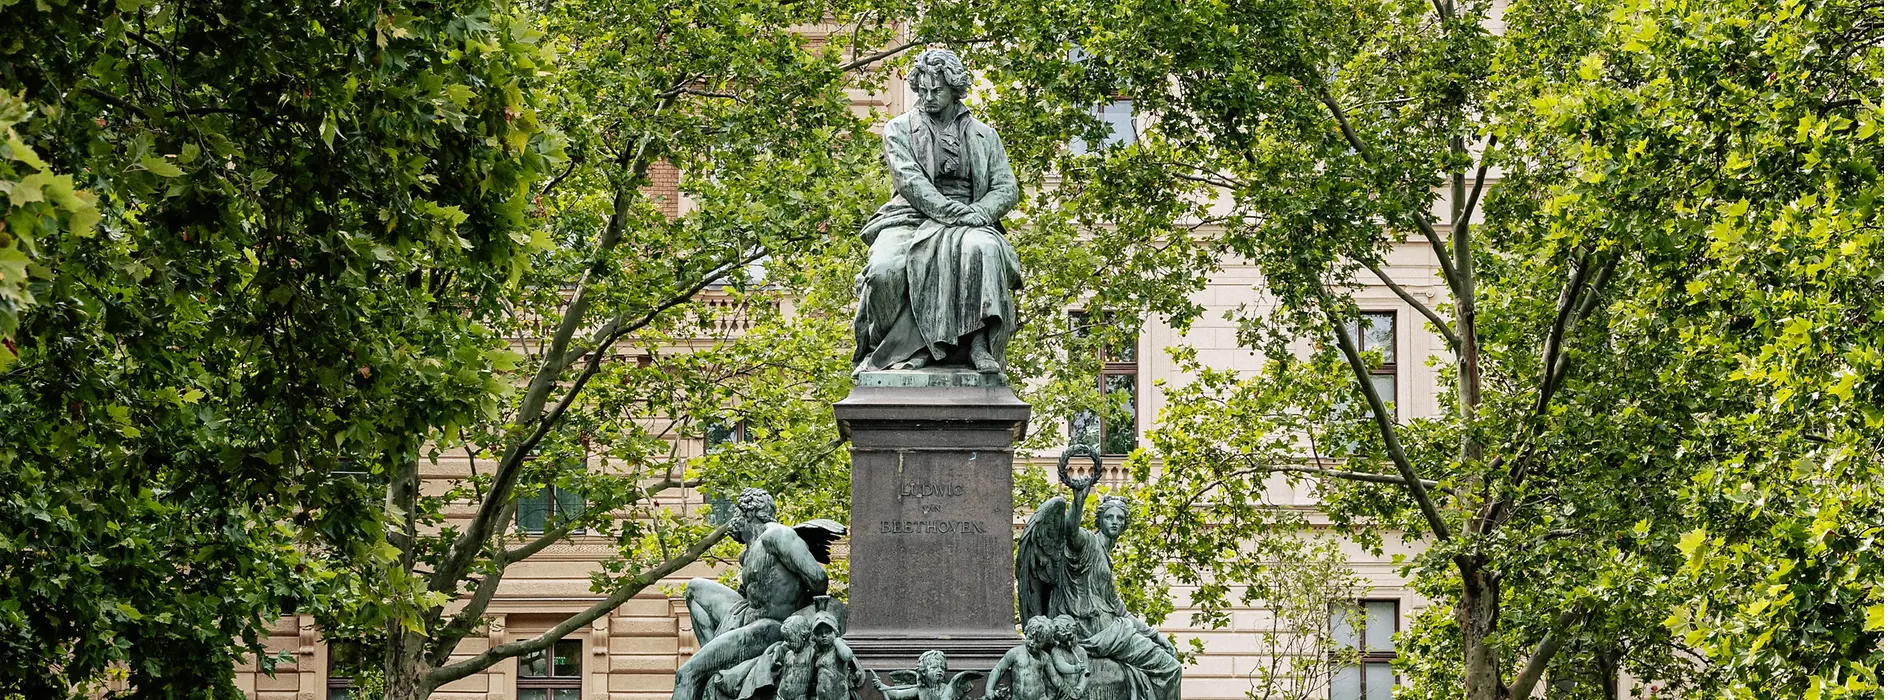 Beethoven memorial